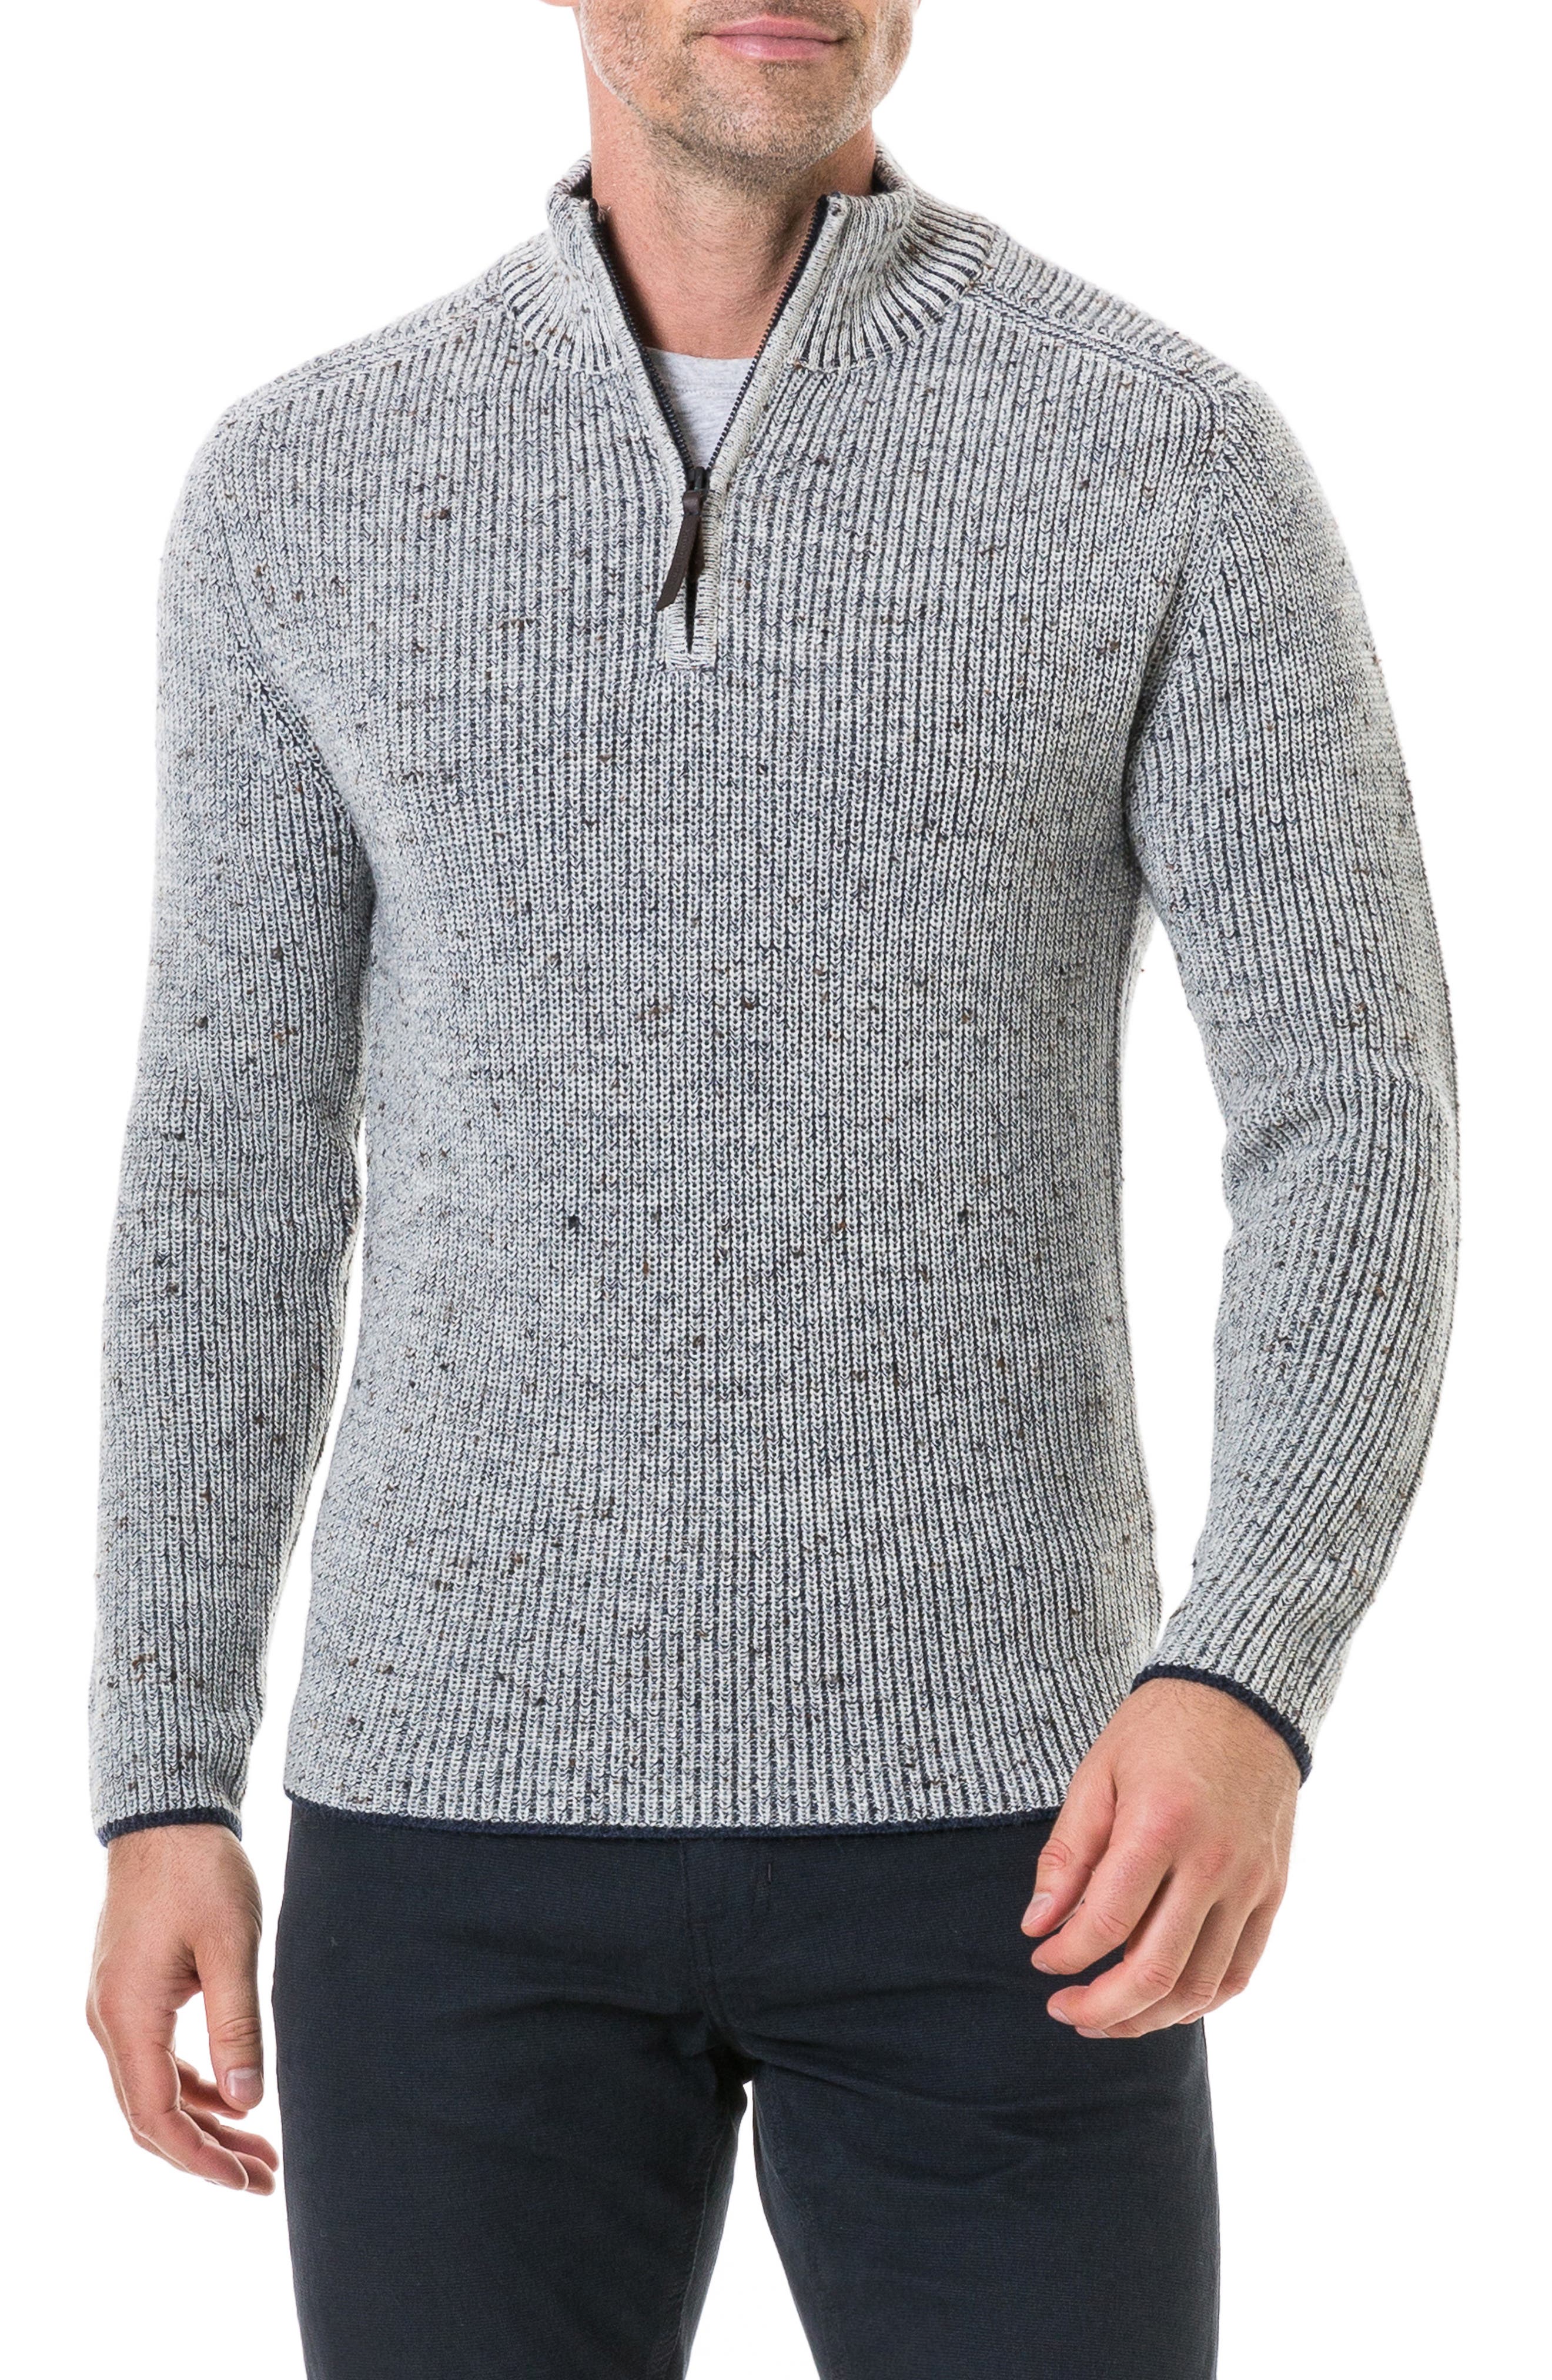 Keaac Men Slim Fit Turtleneck Casual Pullover Sweaters 